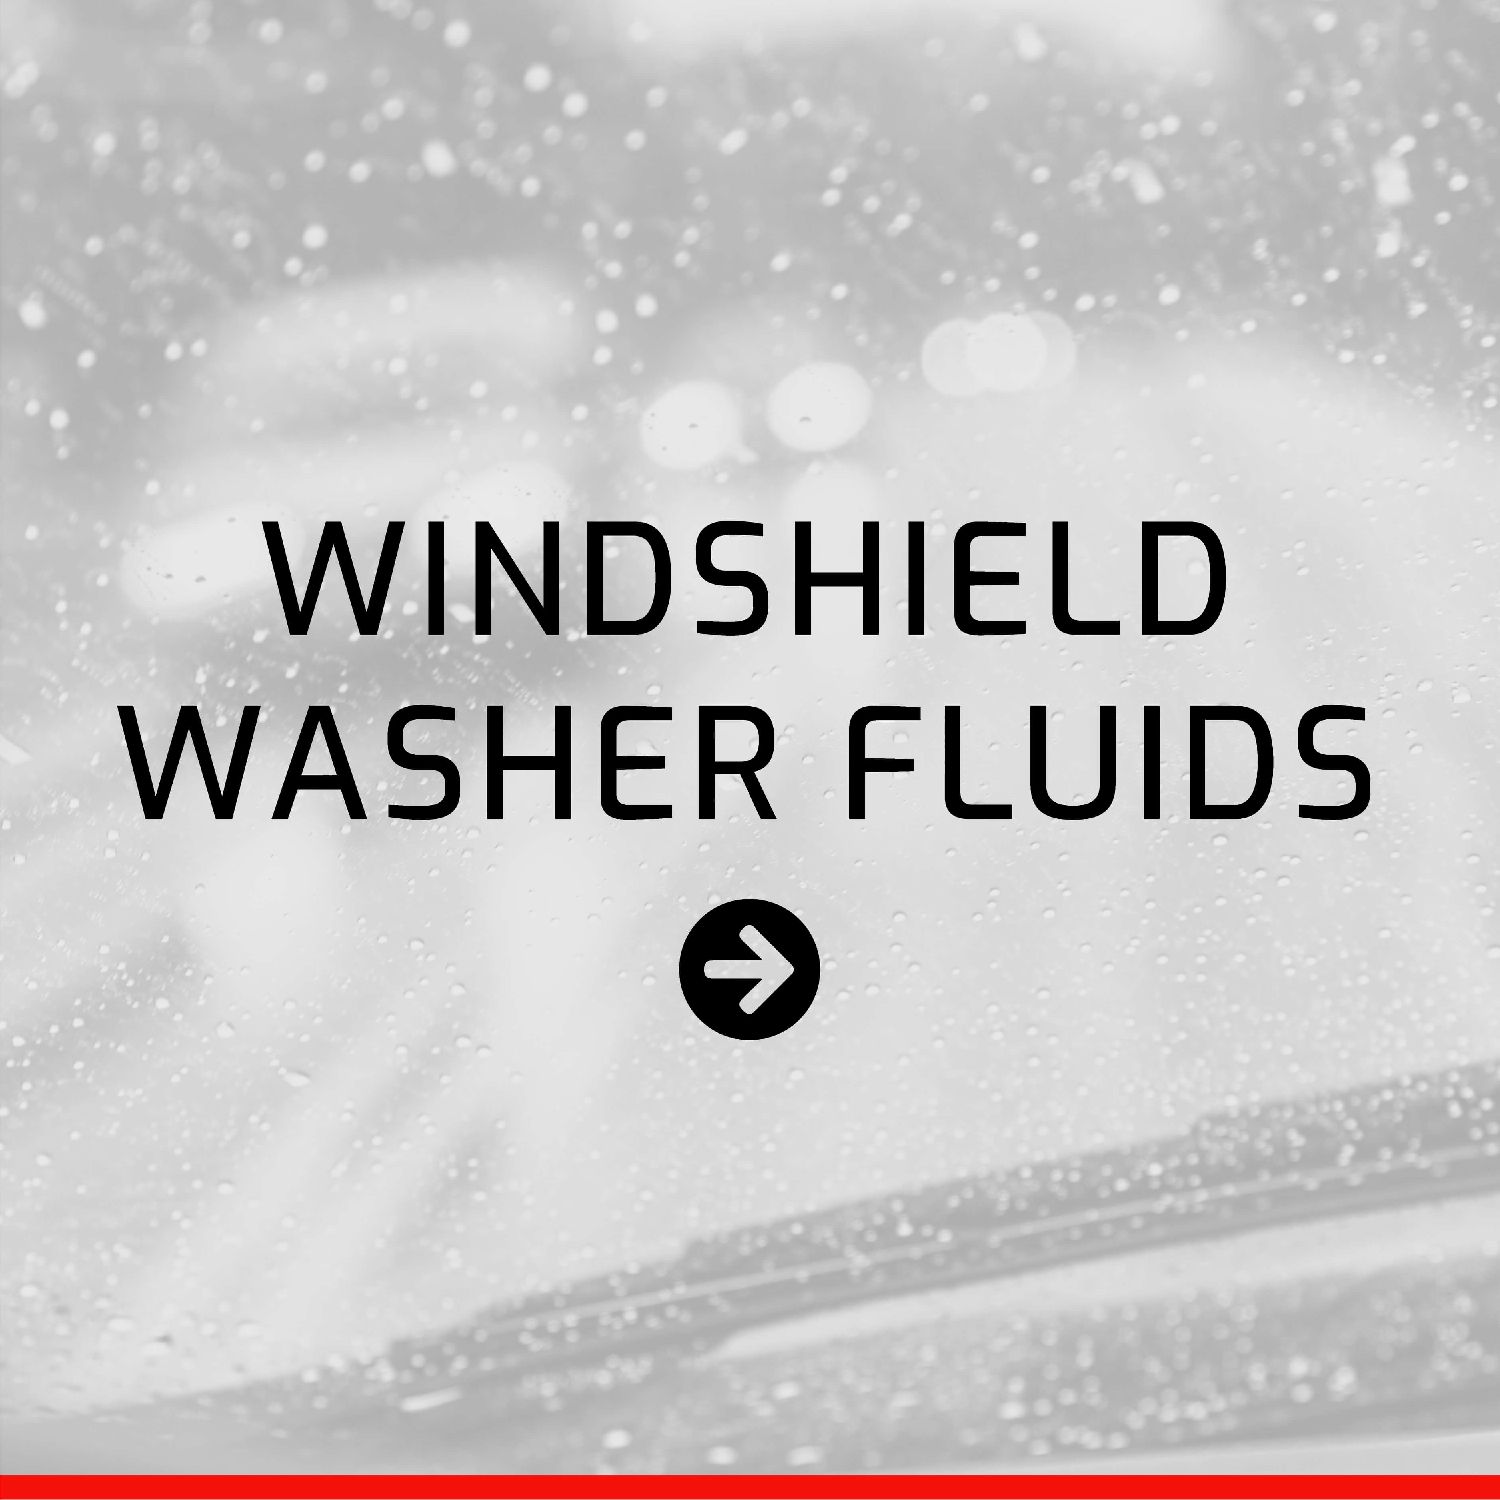 Windshield Washer Fluids